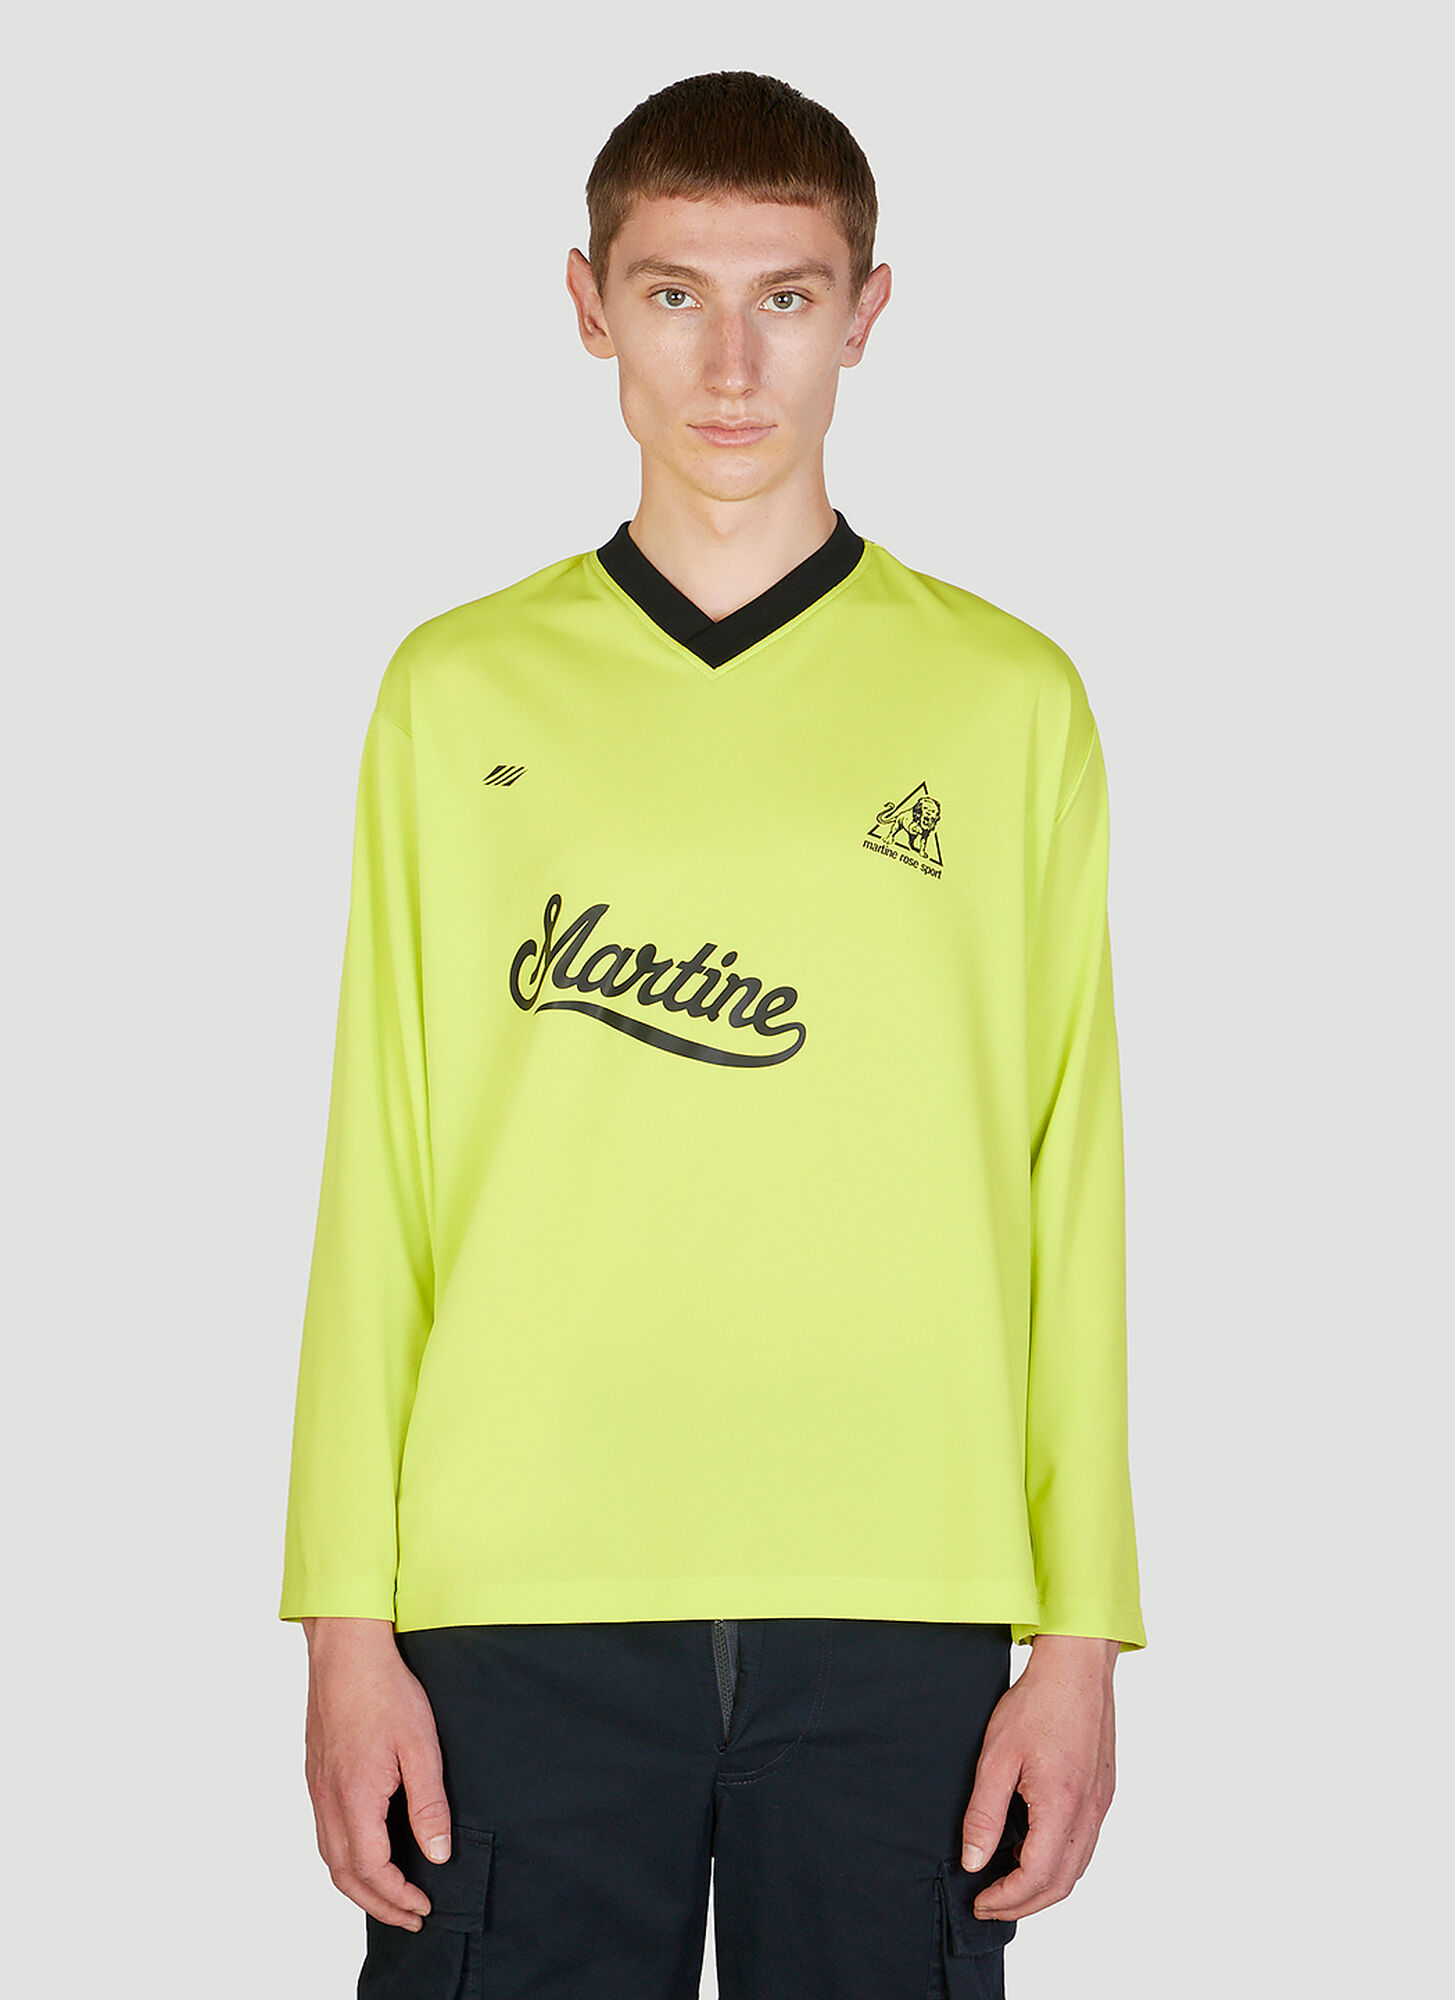 Martine Rose Twist Football Top In Yellow